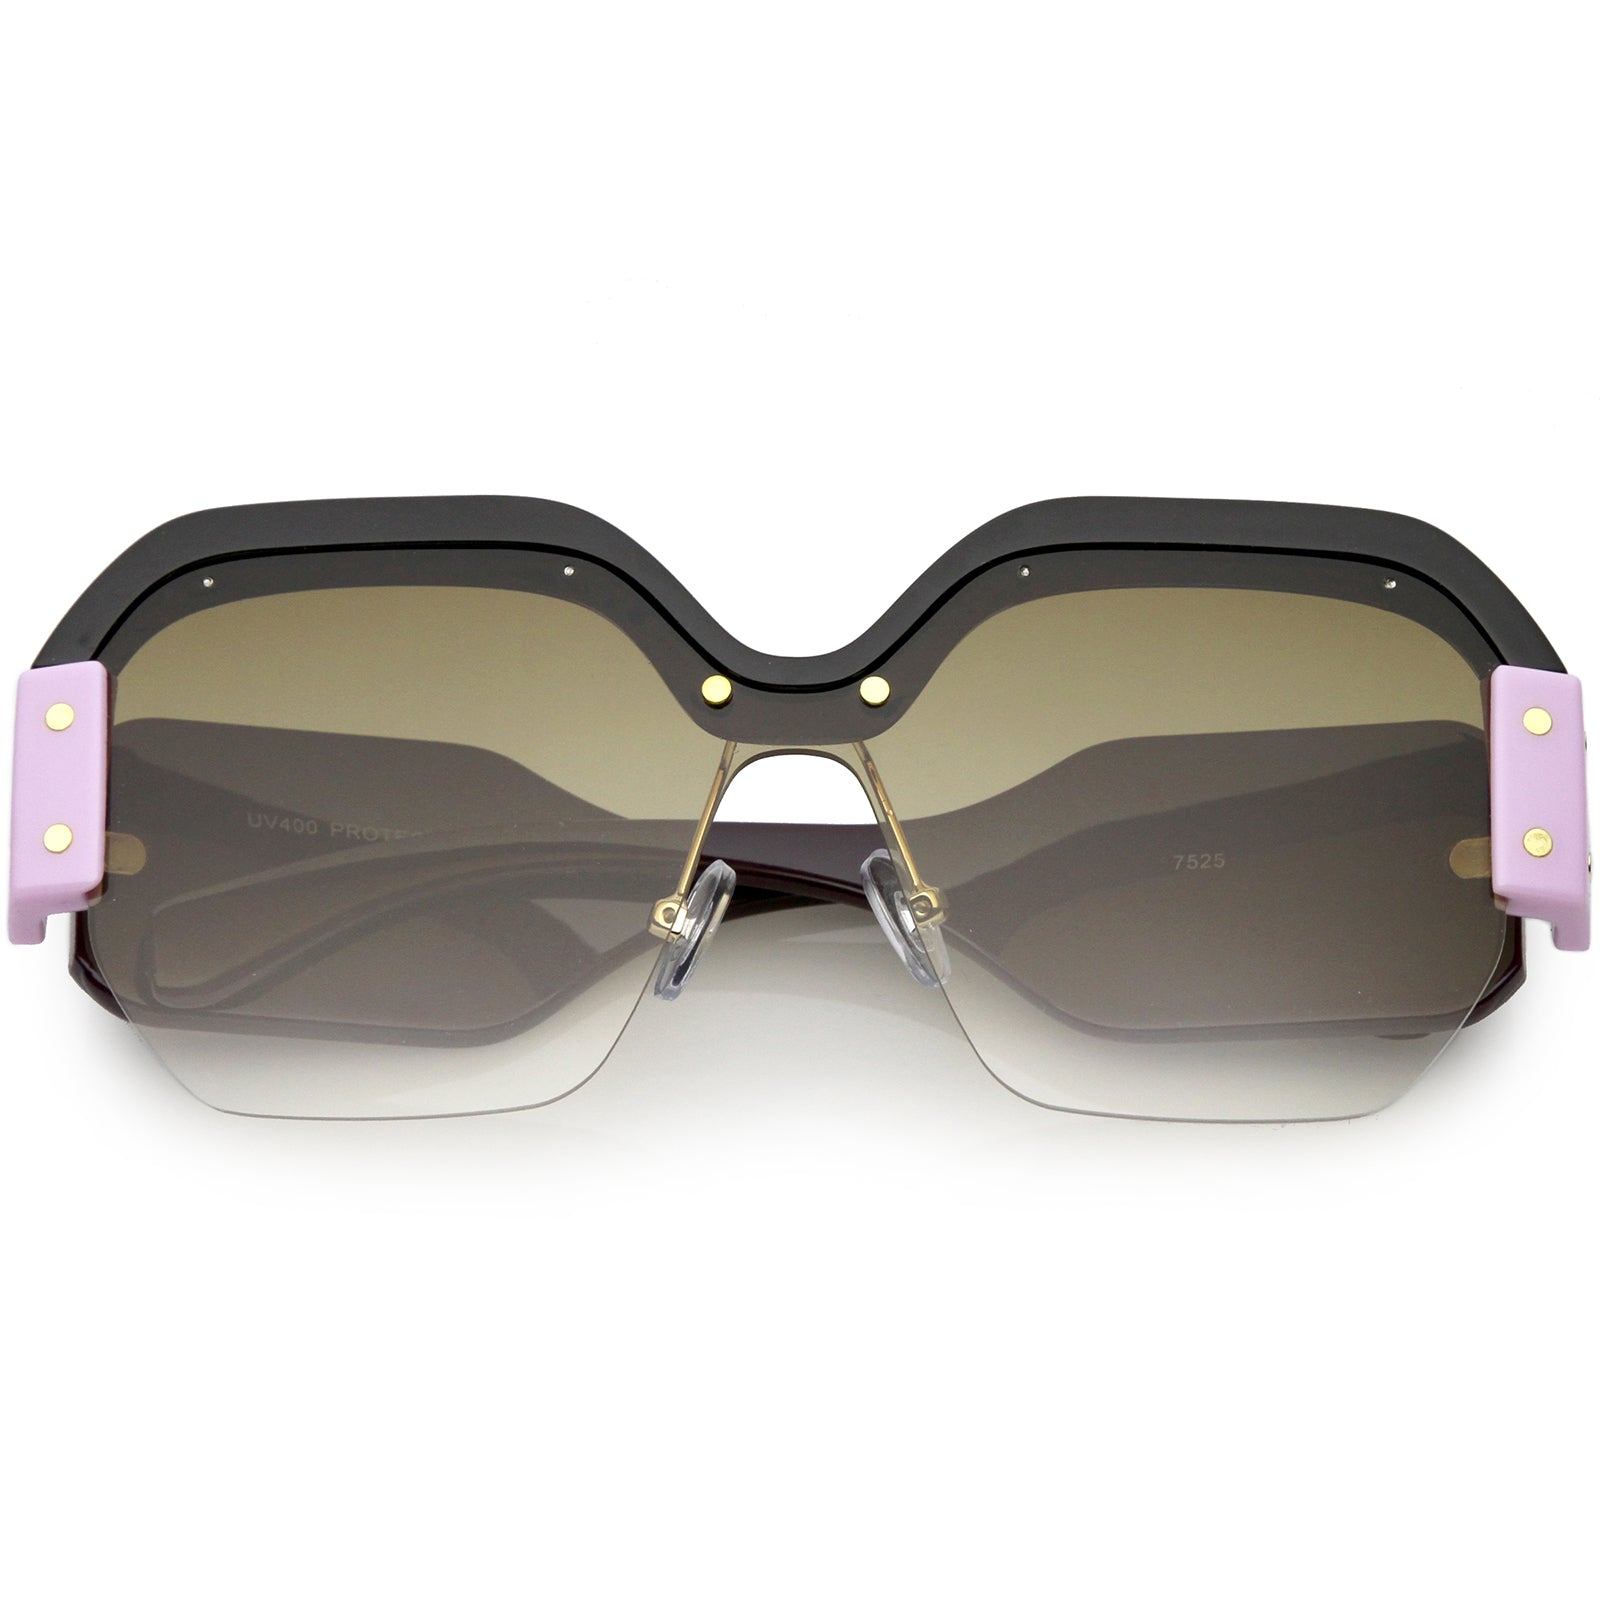 Black Rimless square metal sunglasses